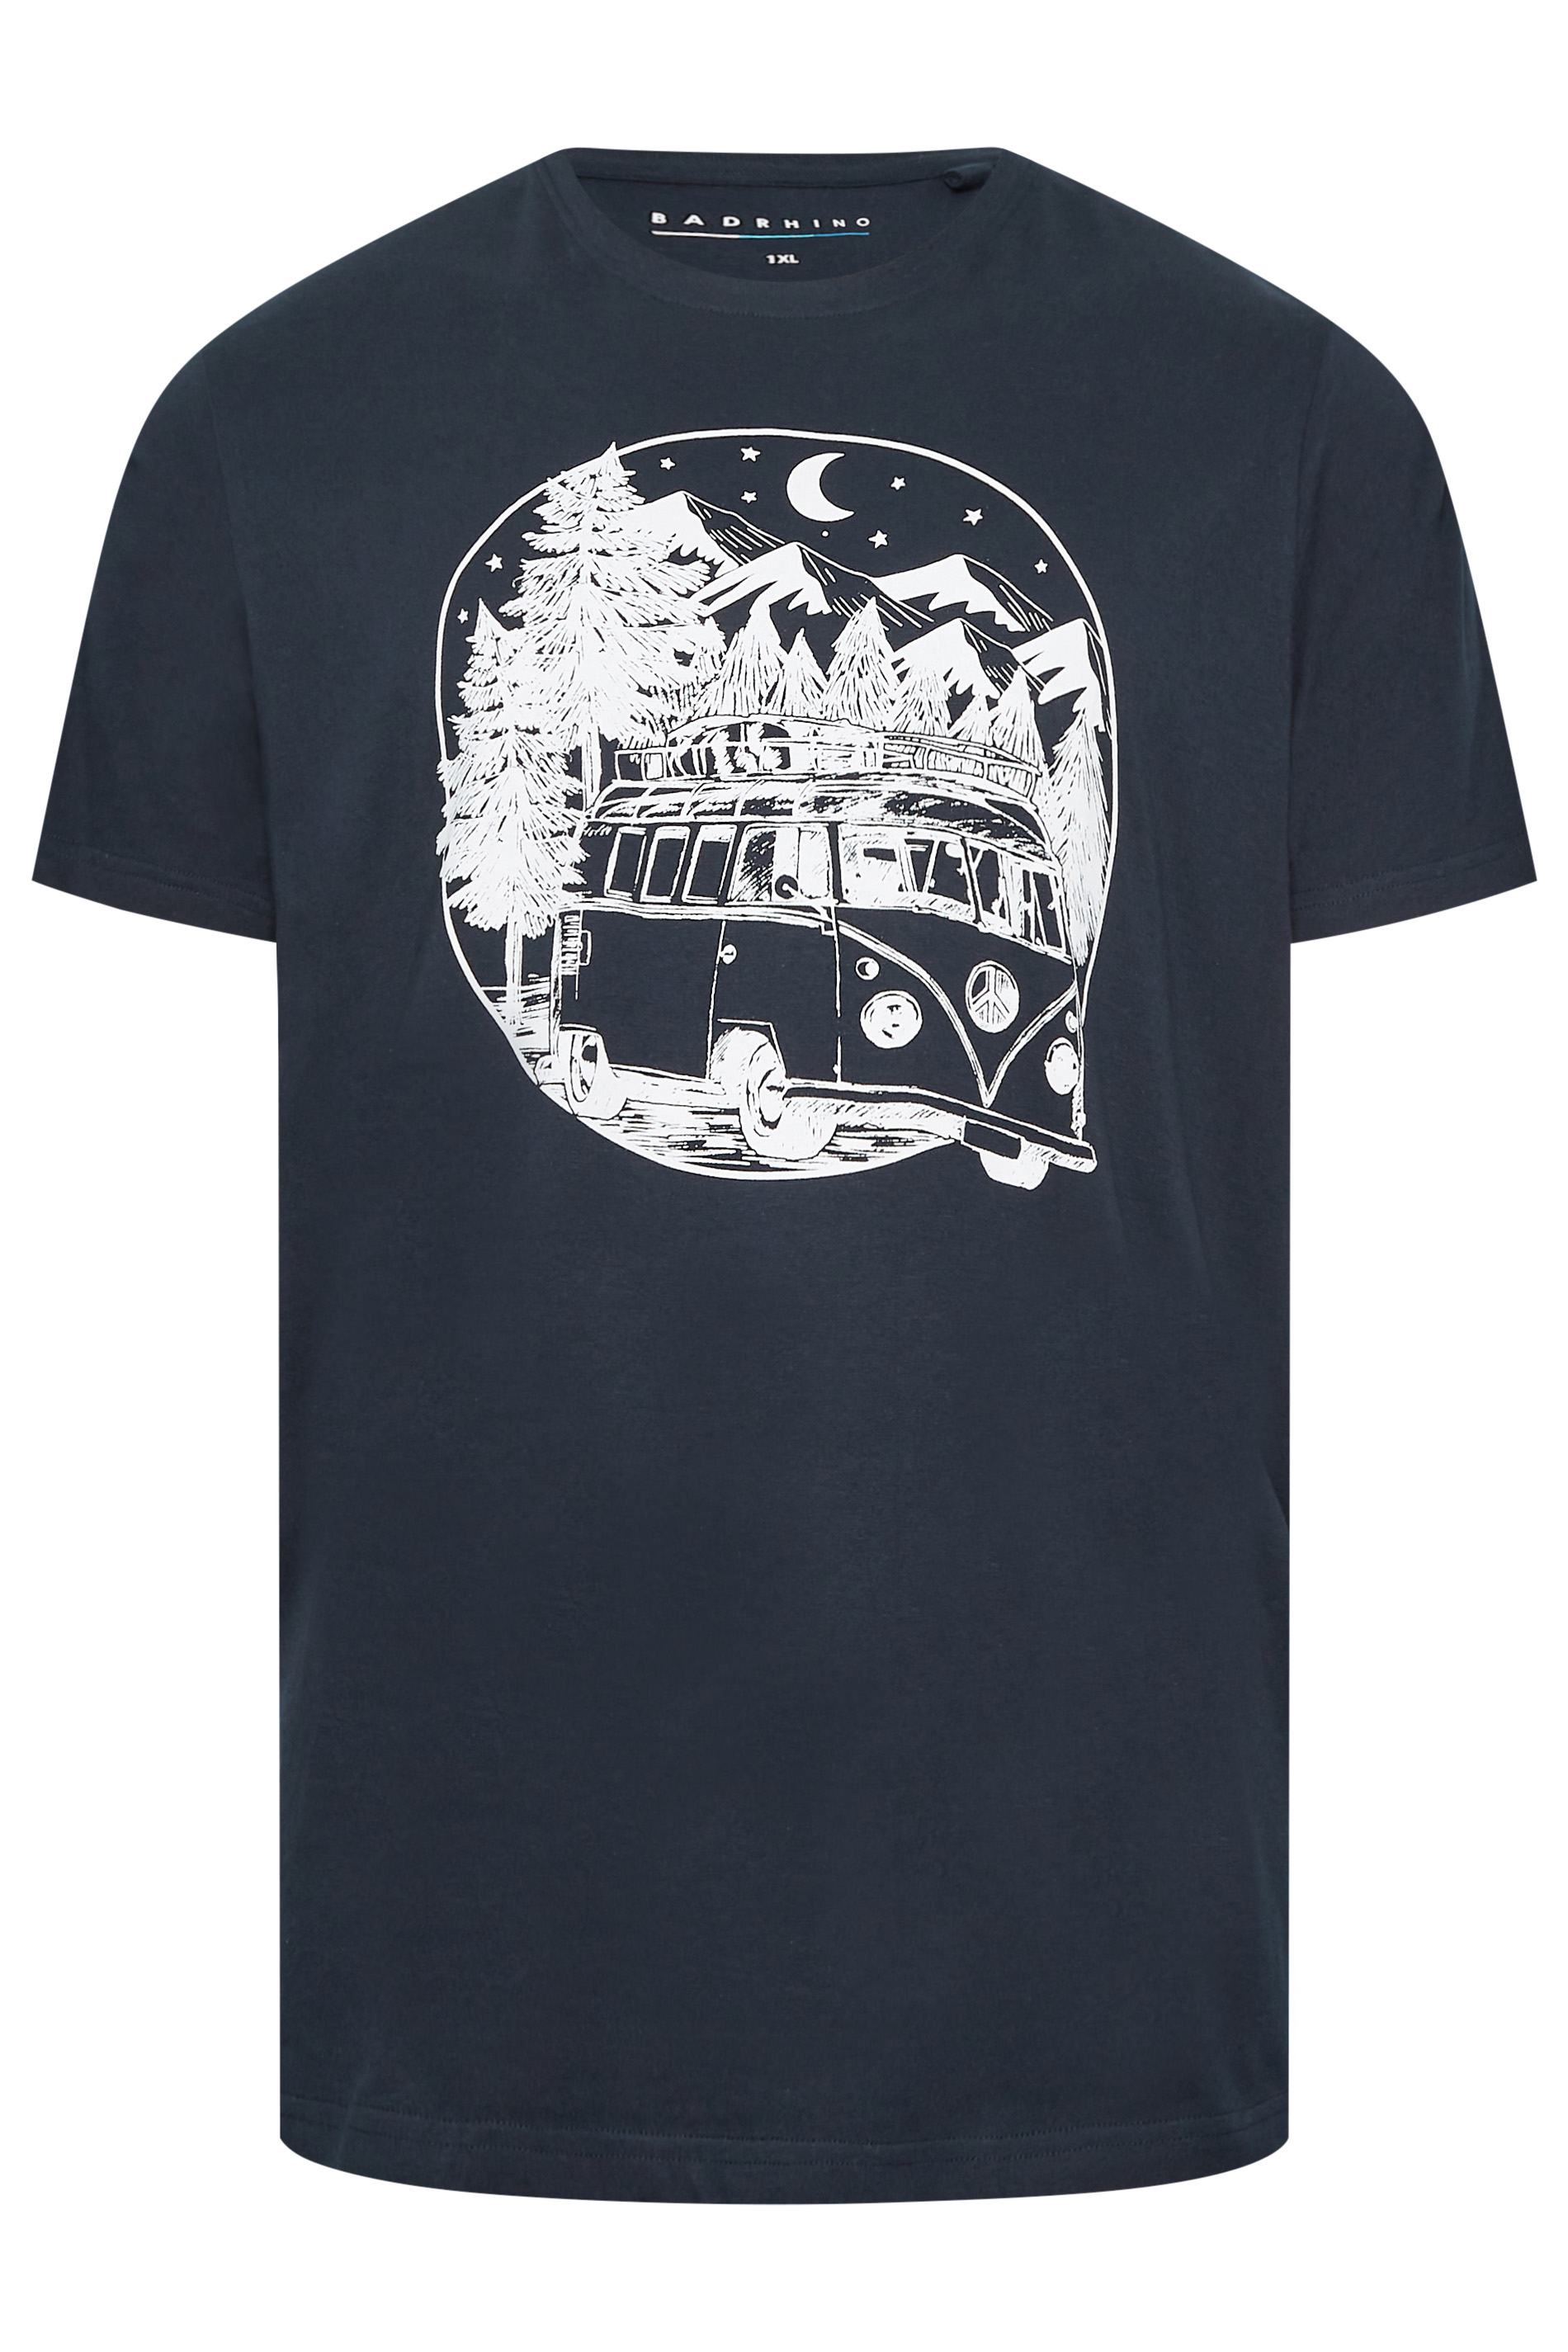 BadRhino Big & Tall Navy Blue Campervan Print T-Shirt | BadRhino 3